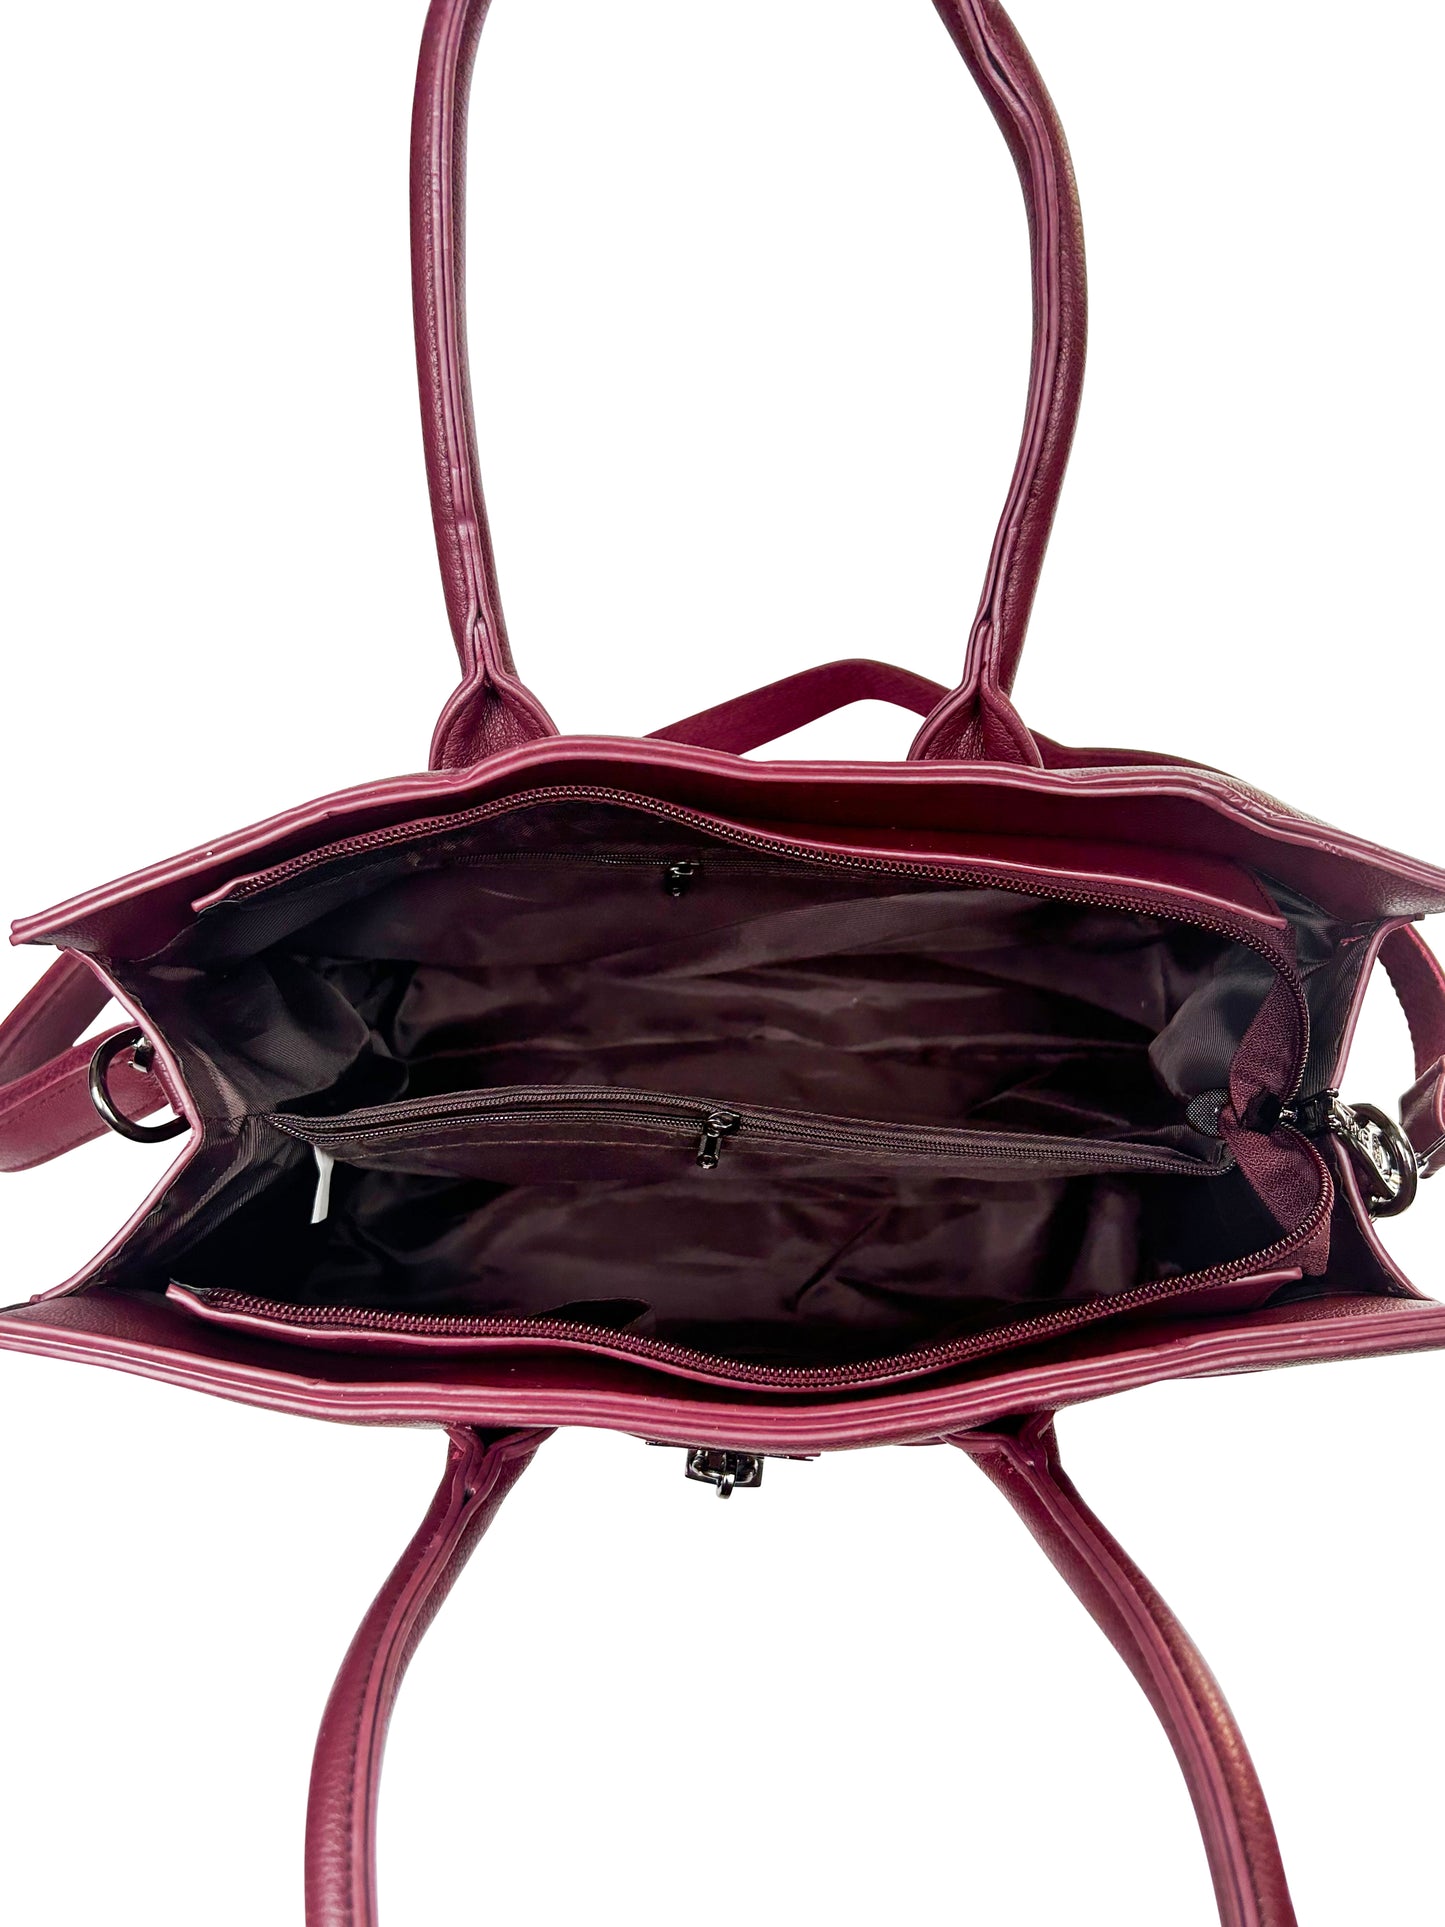 Women's PU Leather Handbags